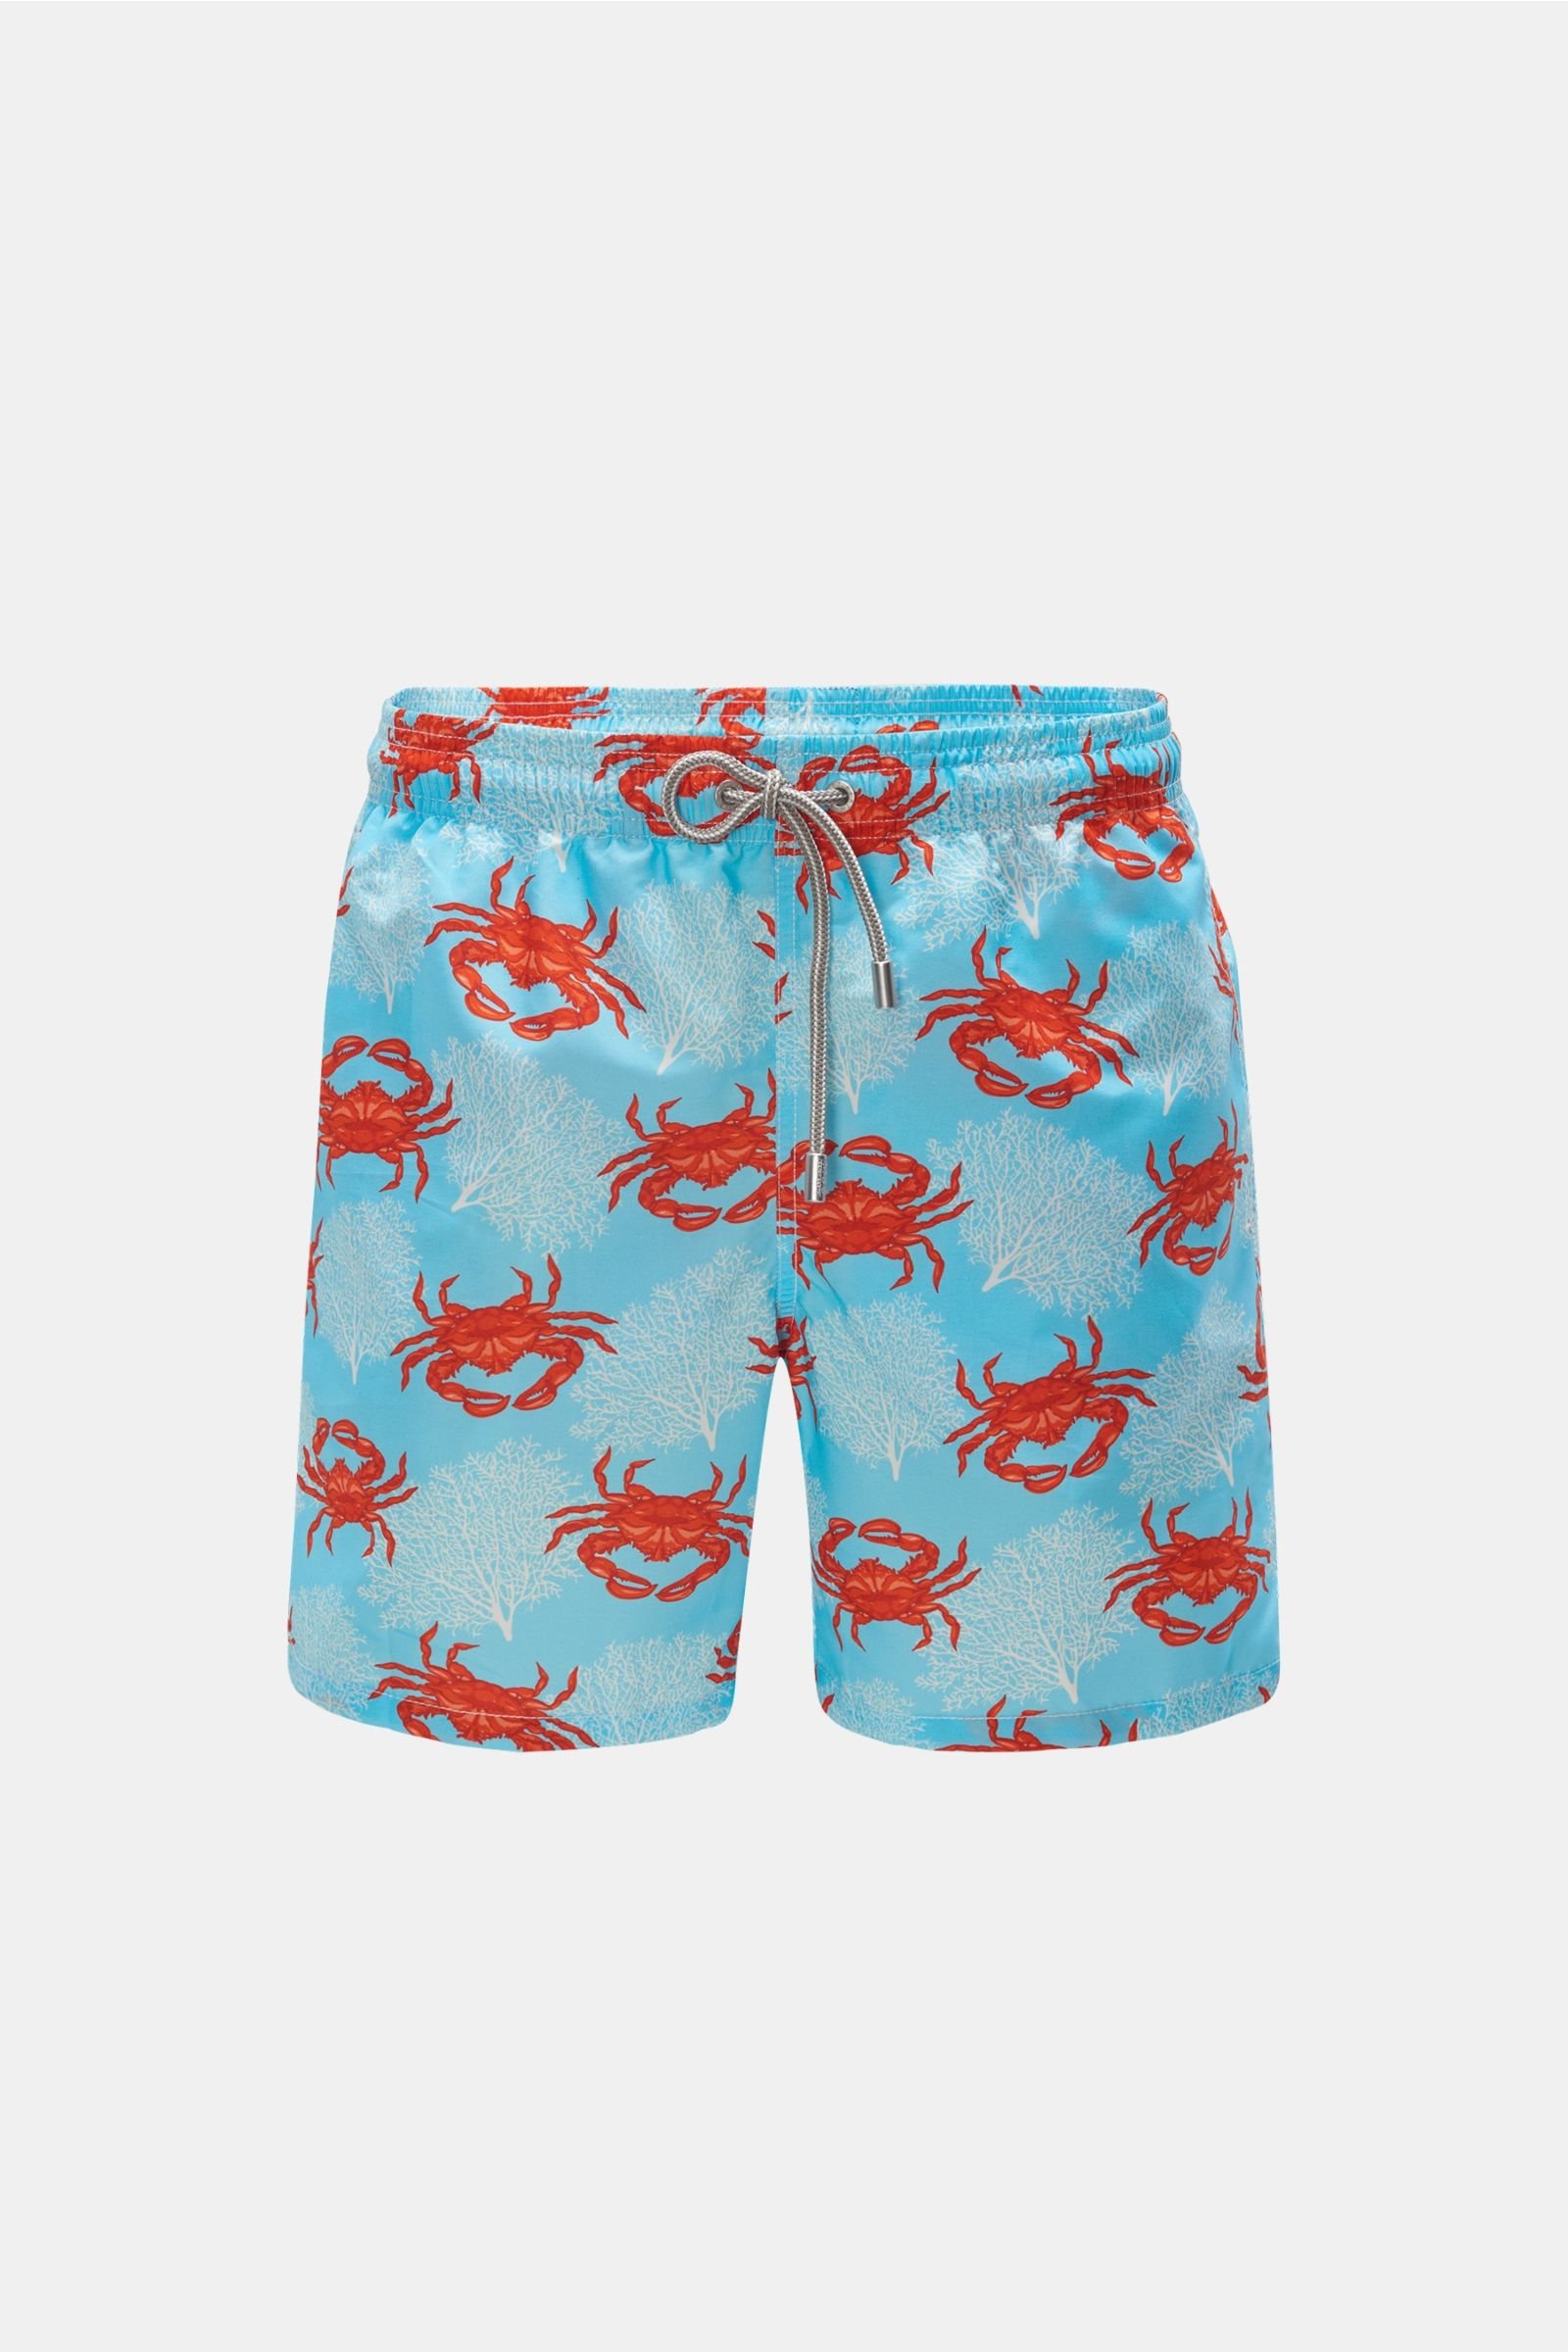 Swim shorts 'Crab Land' turquoise/red patterned